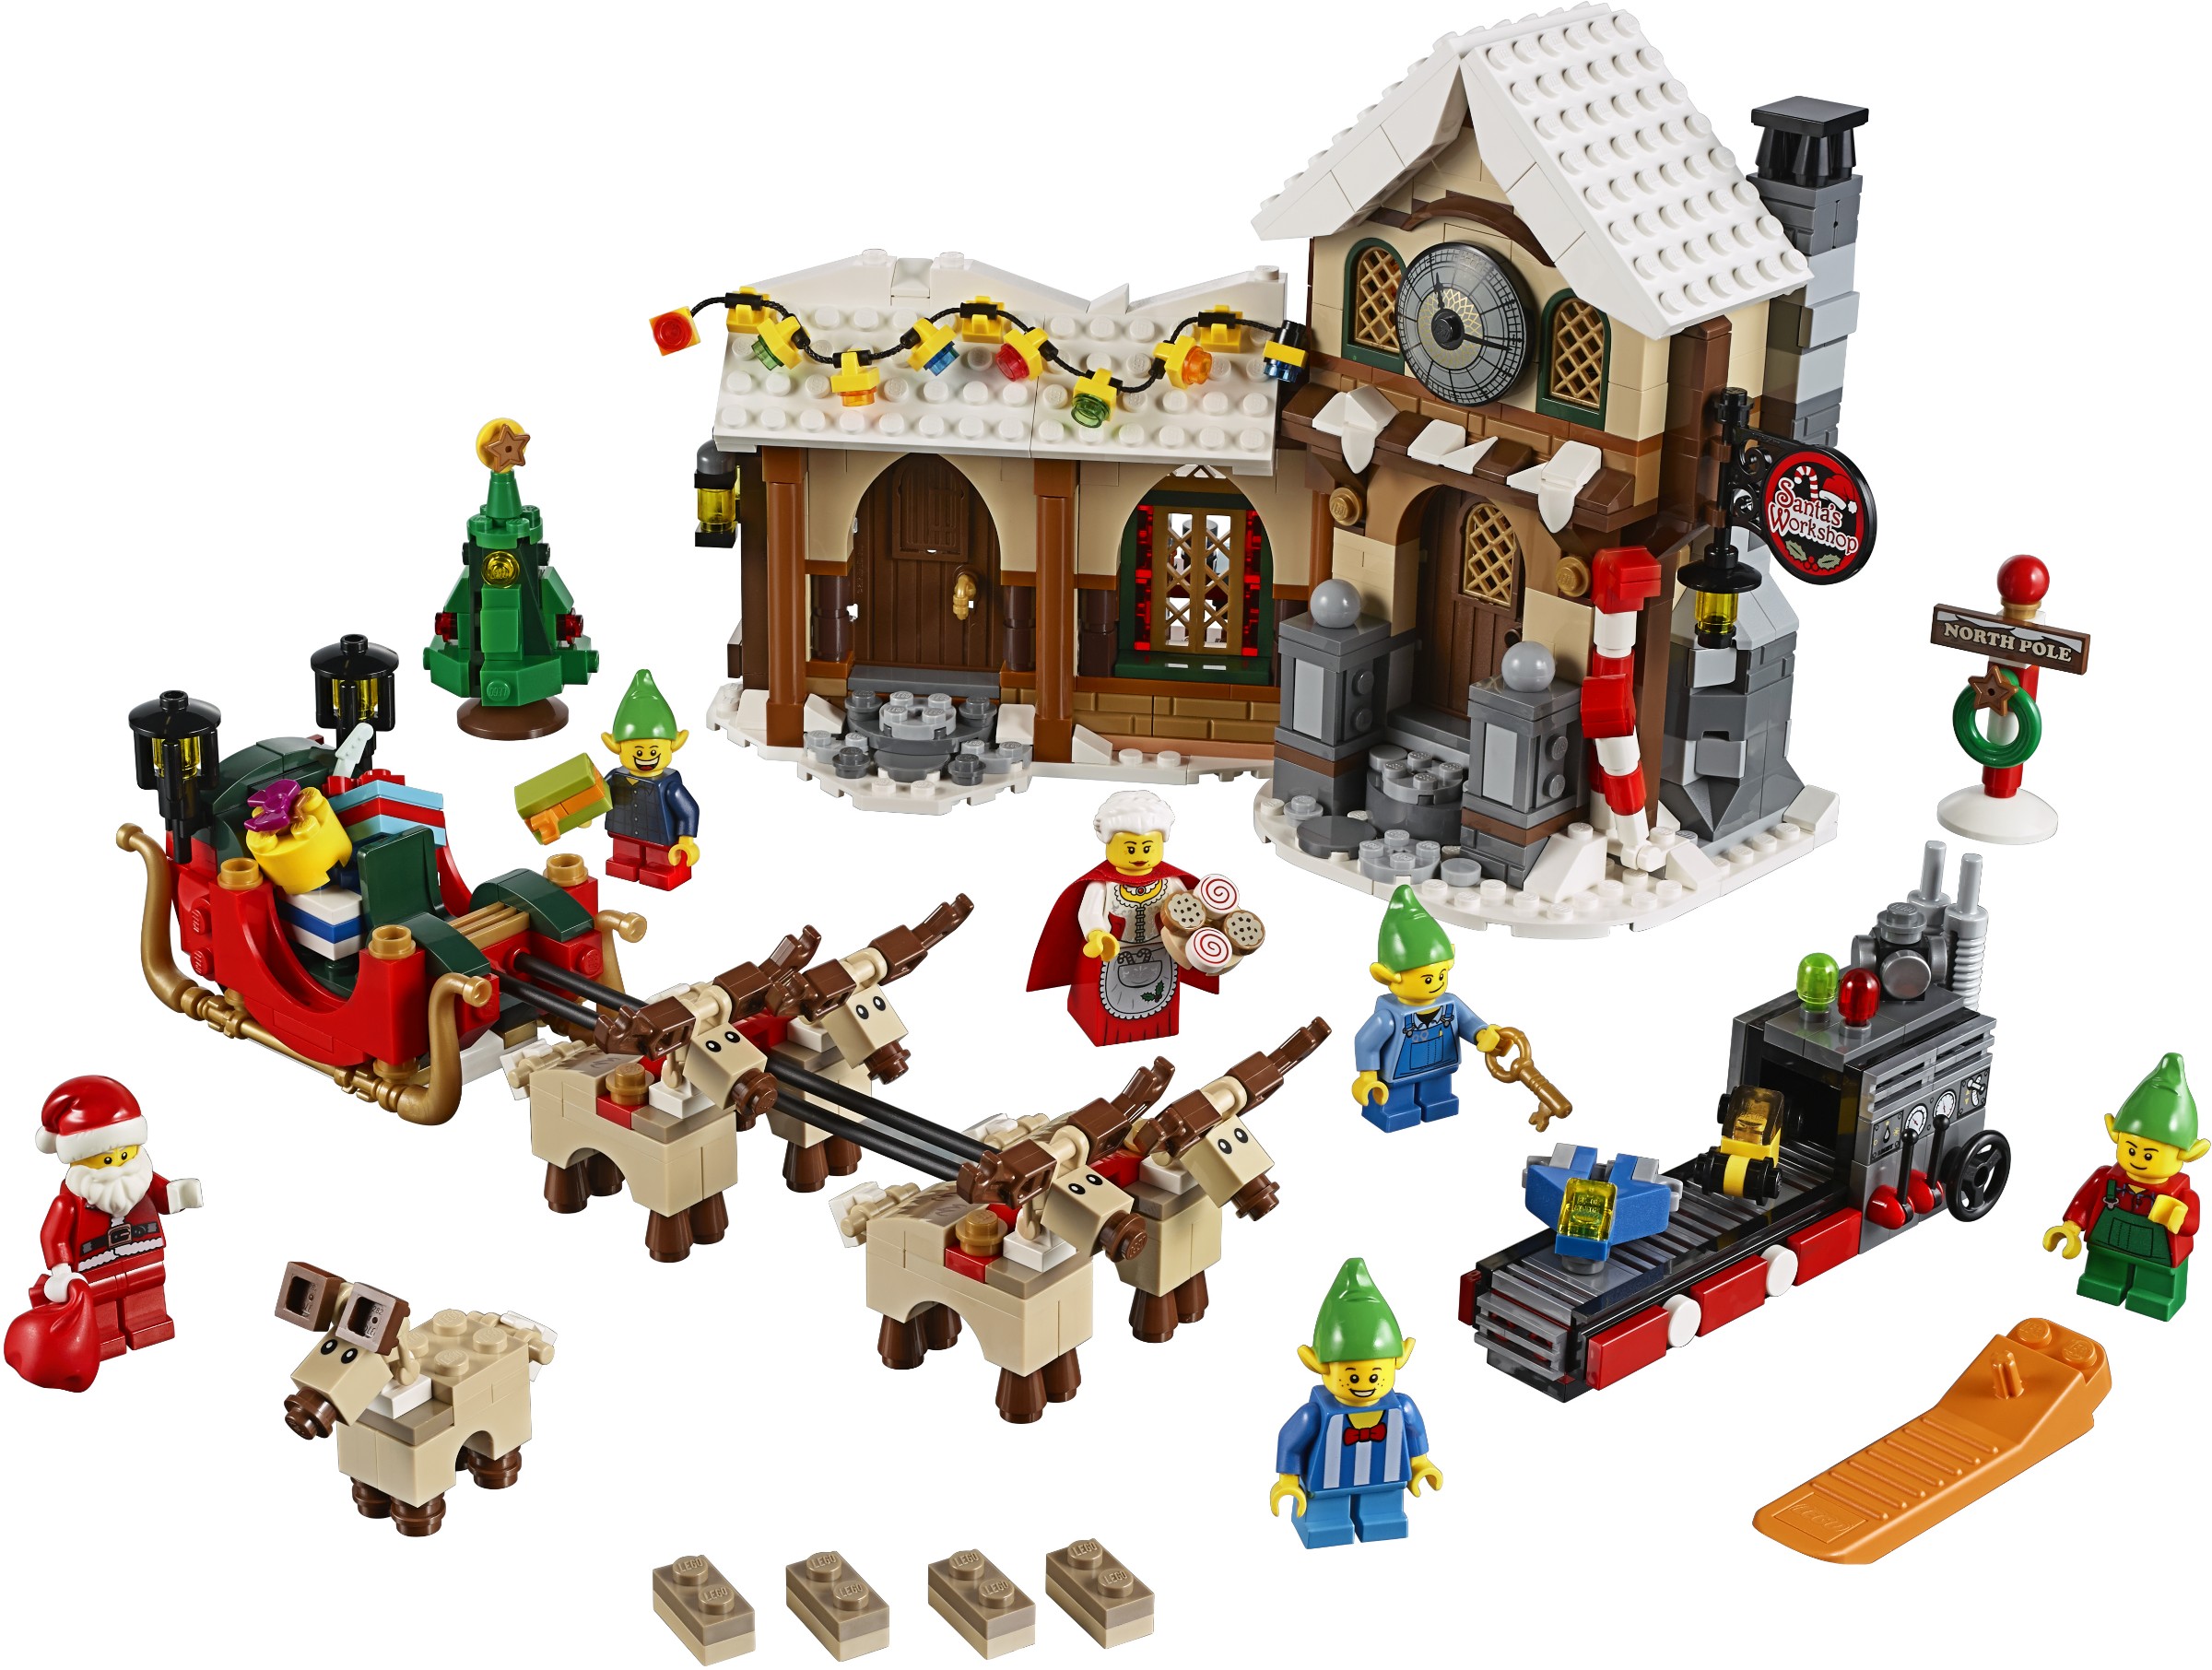 LEGO Winter Village set ever